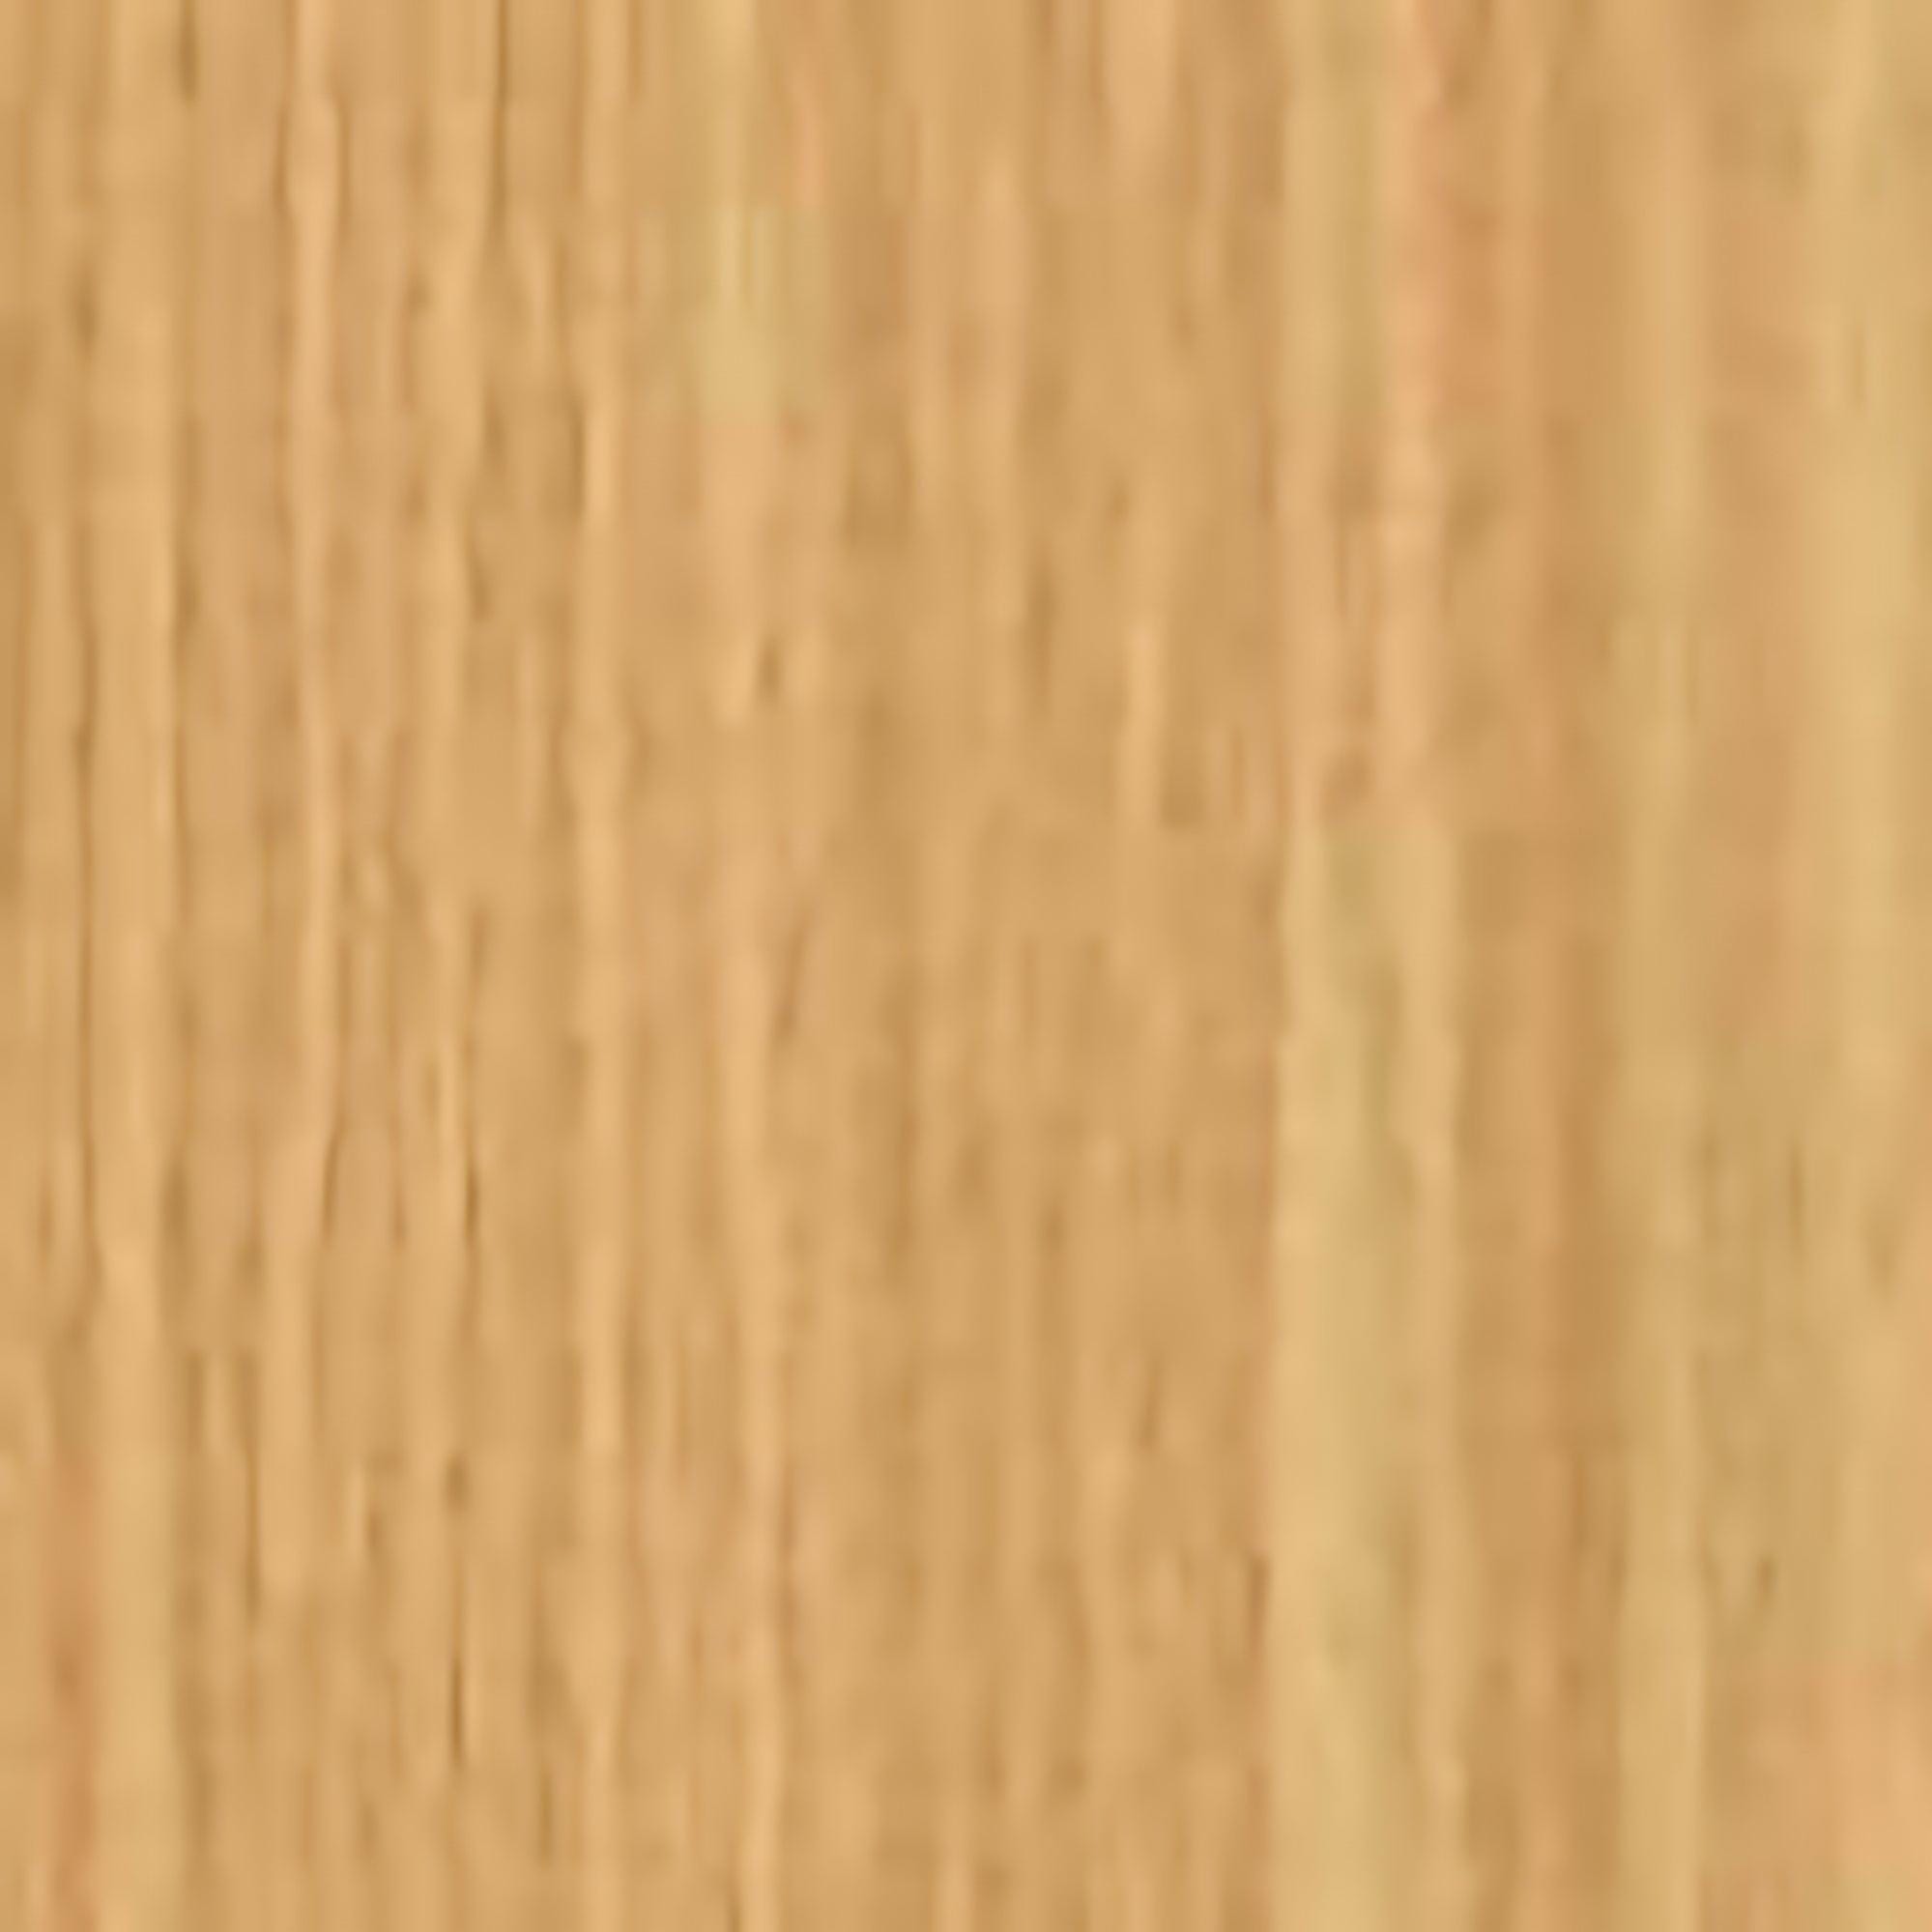 d-c-fix vinilo adhesivo muebles Rústico efecto madera autoadhesivo